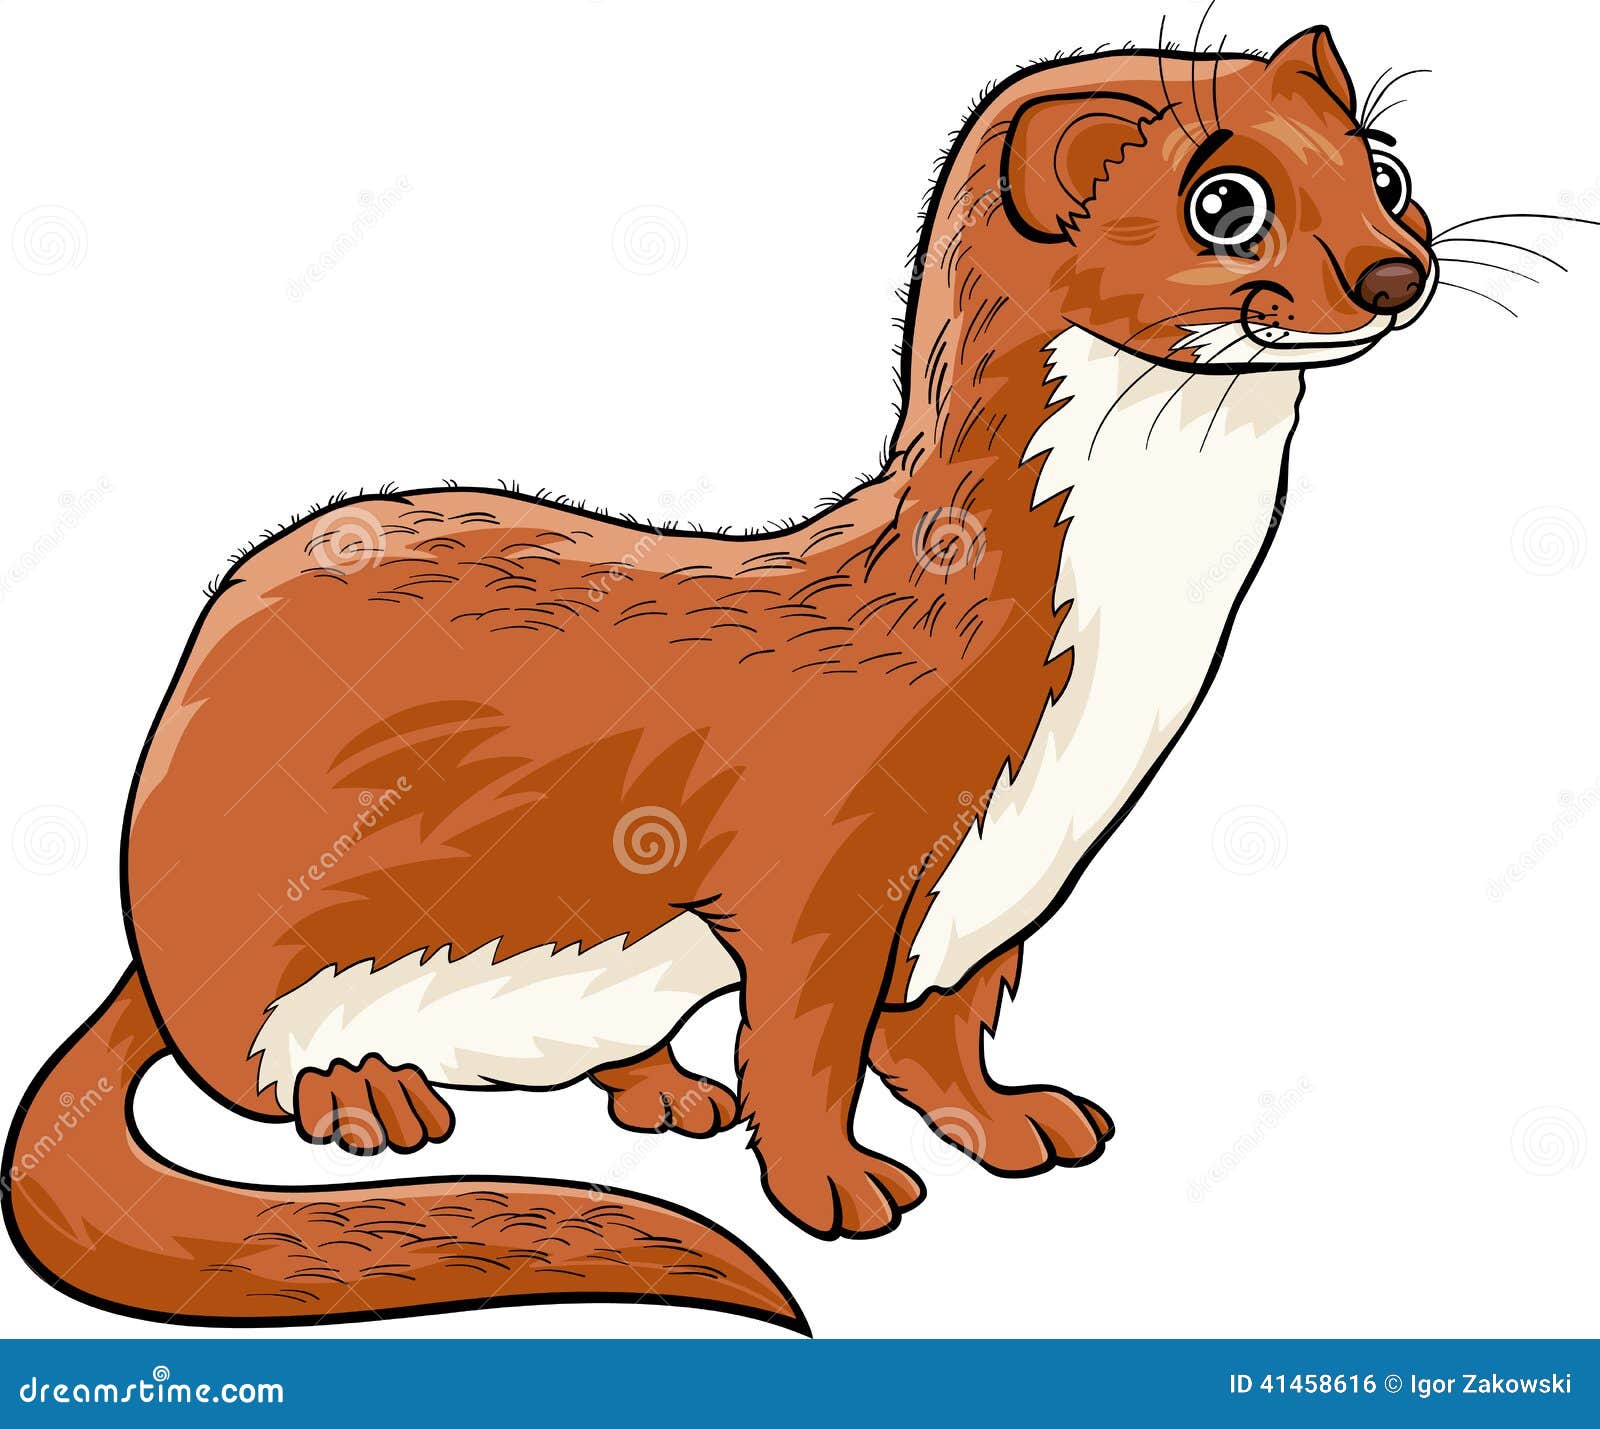 Weasel Animal Cartoon Illustration Stock Vector  Image: 41458616